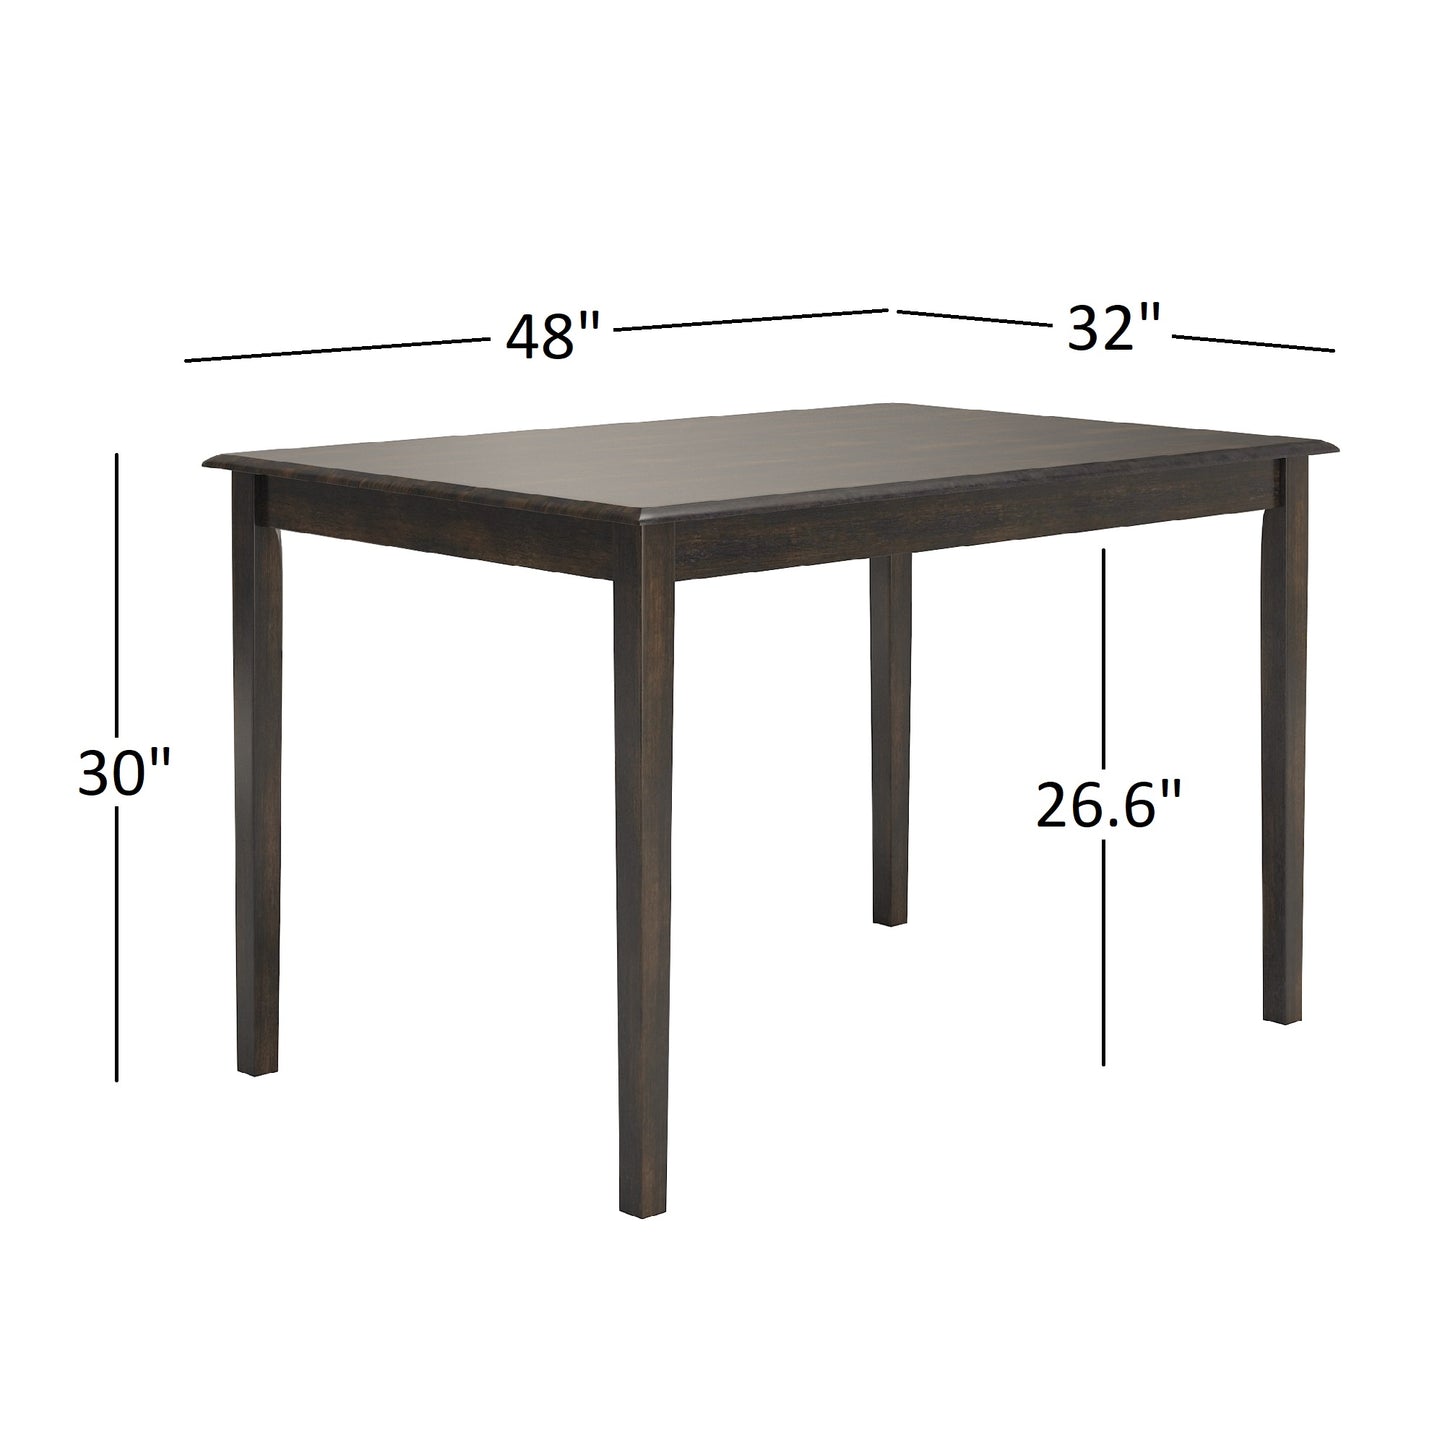 48-inch Rectangular Dining Table - Antique Black Finish